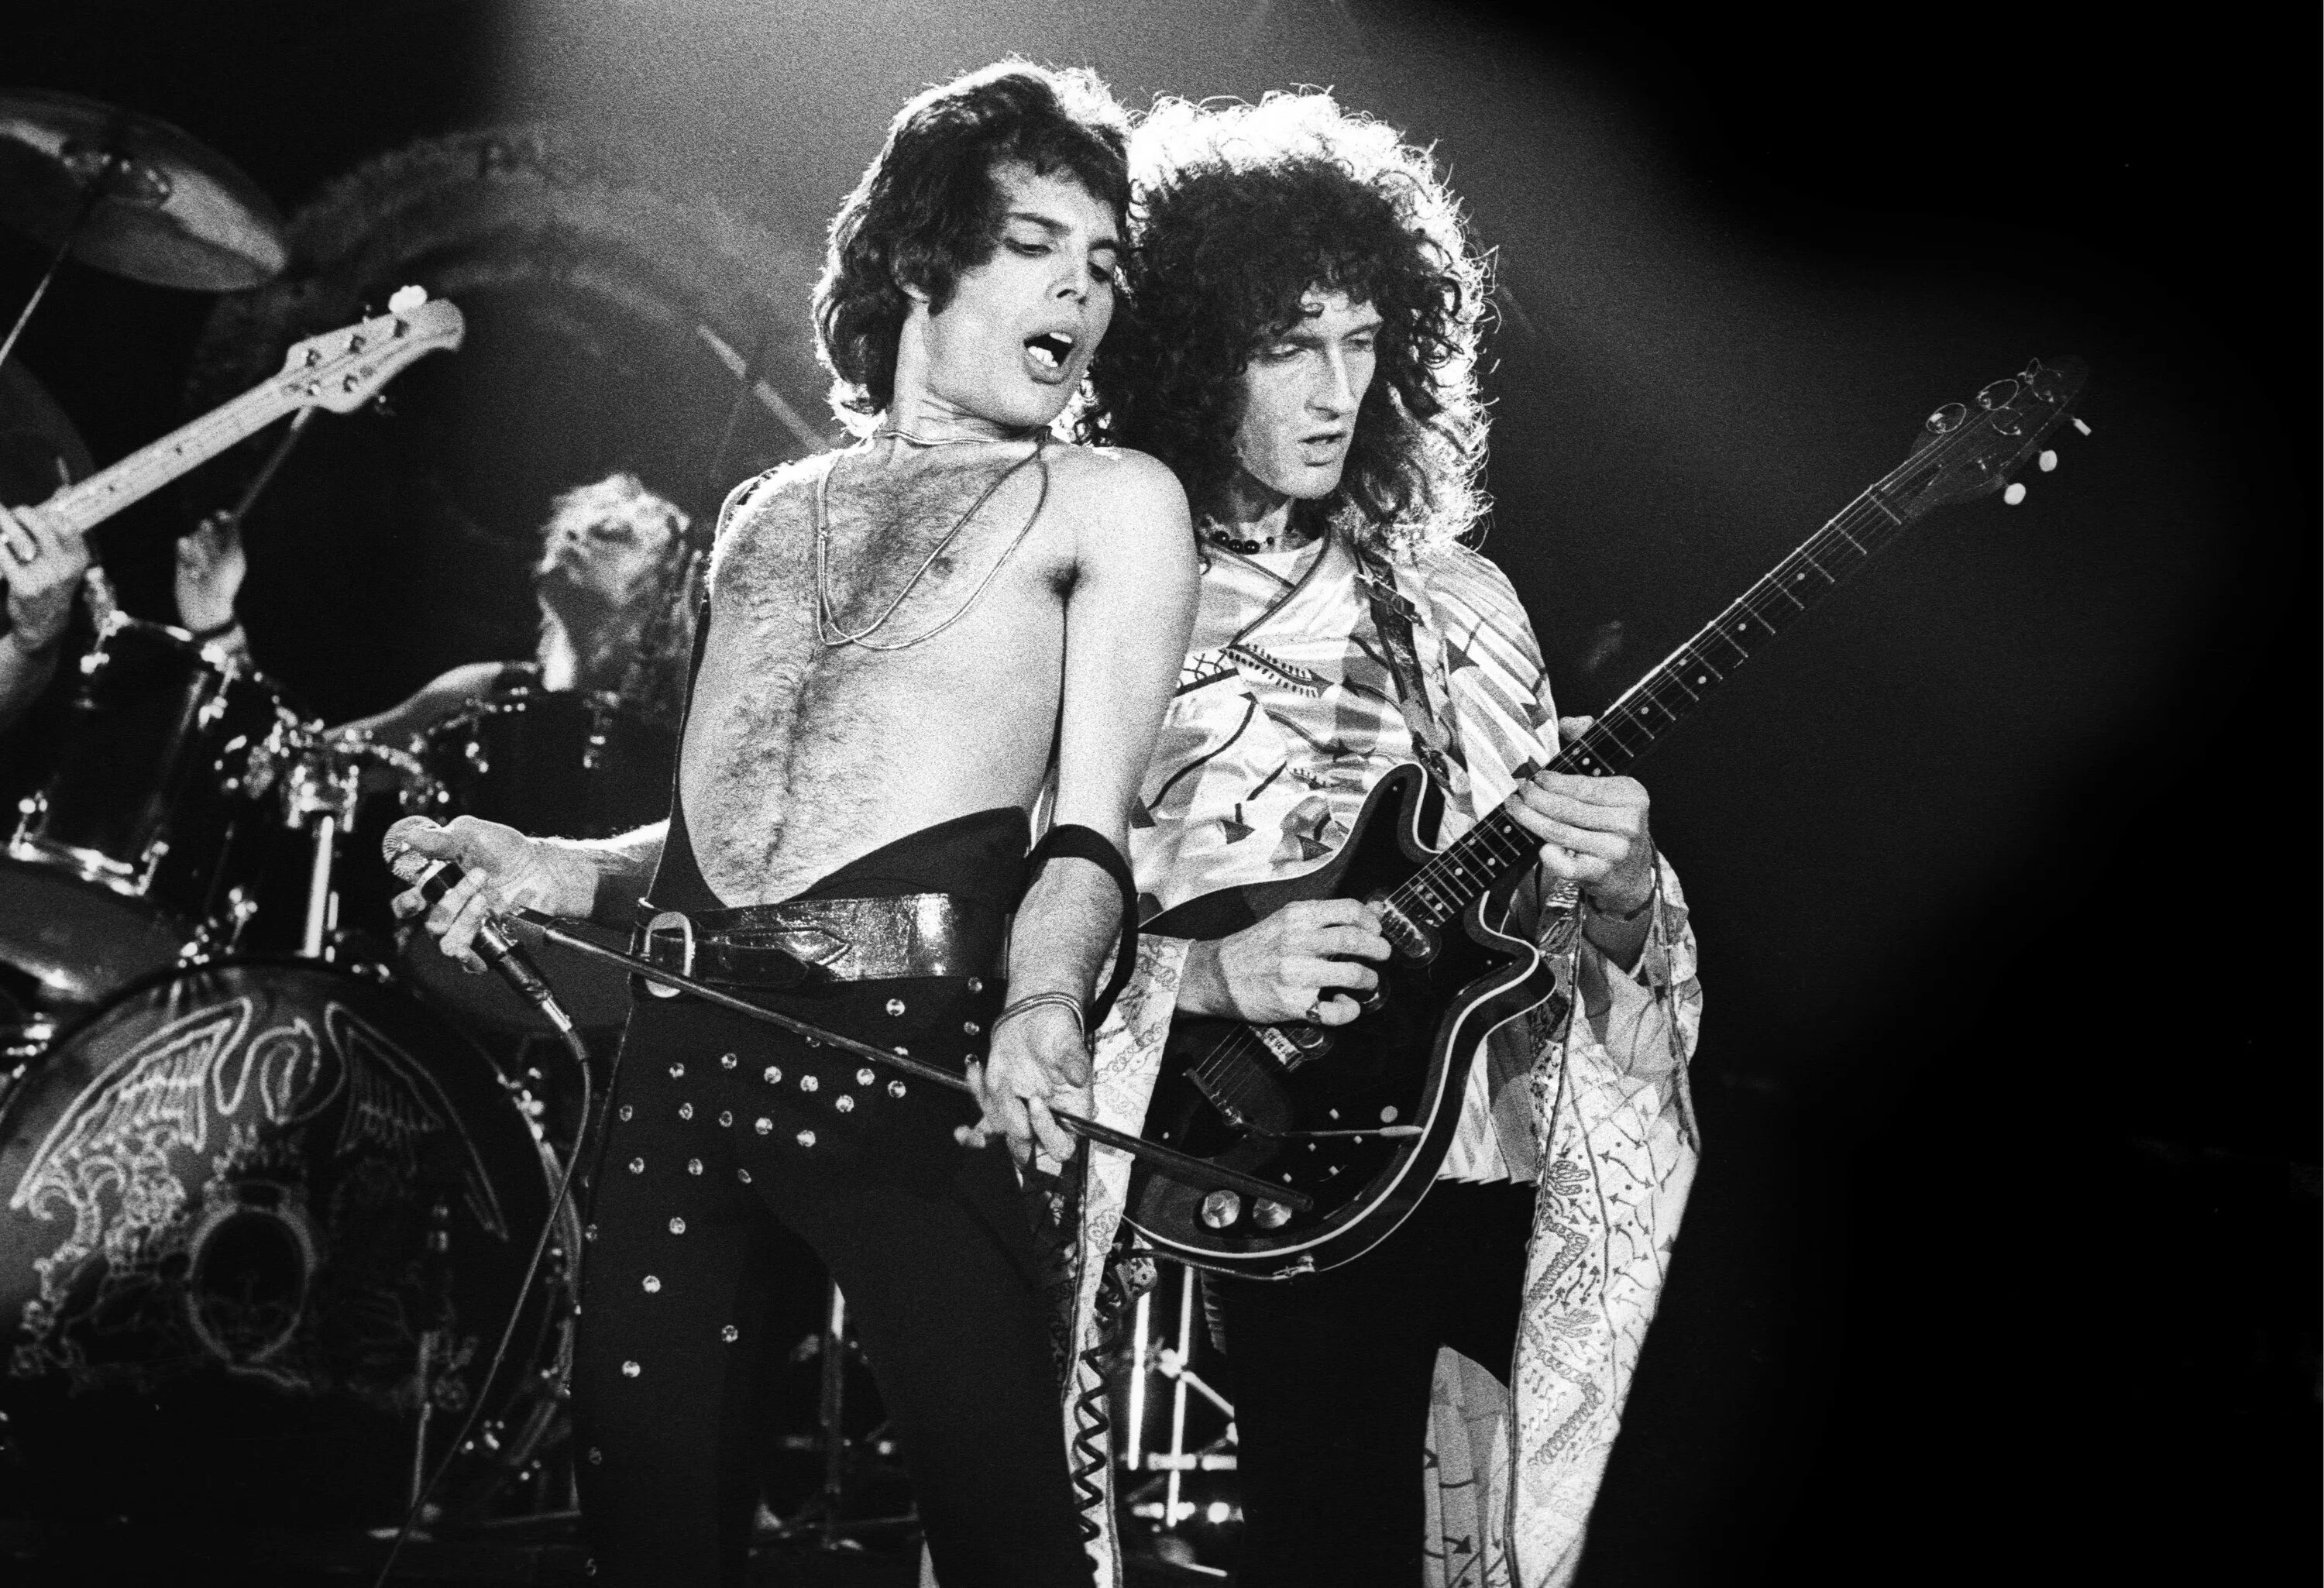 Группа Queen 70s. Брайан Мэй на концерте Queen. Группа Квин фото. Группа Queen Фредди Меркьюри.